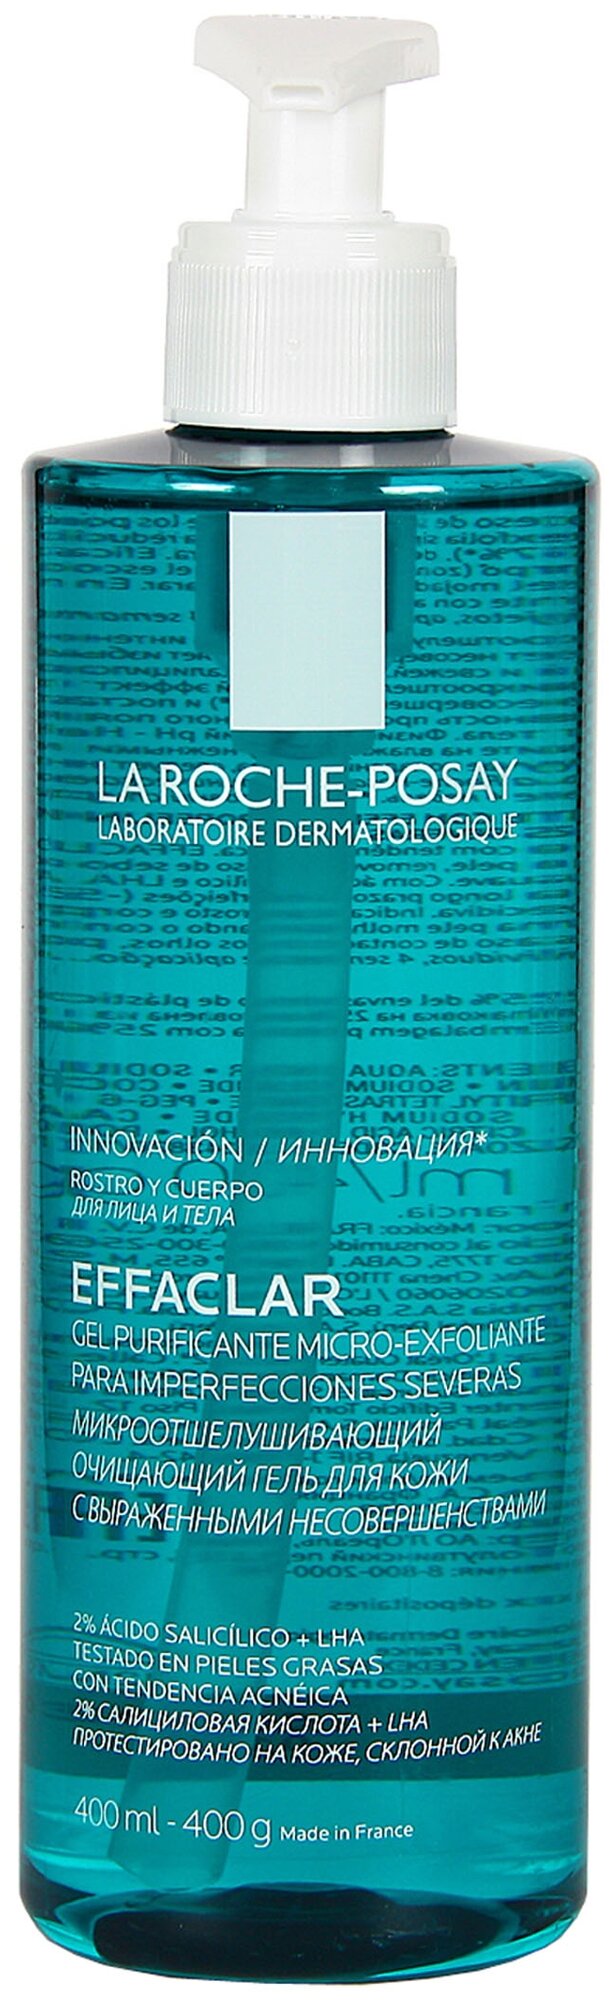 La Roche-Posay Эфаклар очищающий микроотшелушивающий гель для лица и тела 400 мл (La Roche-Posay, ) - фото №1